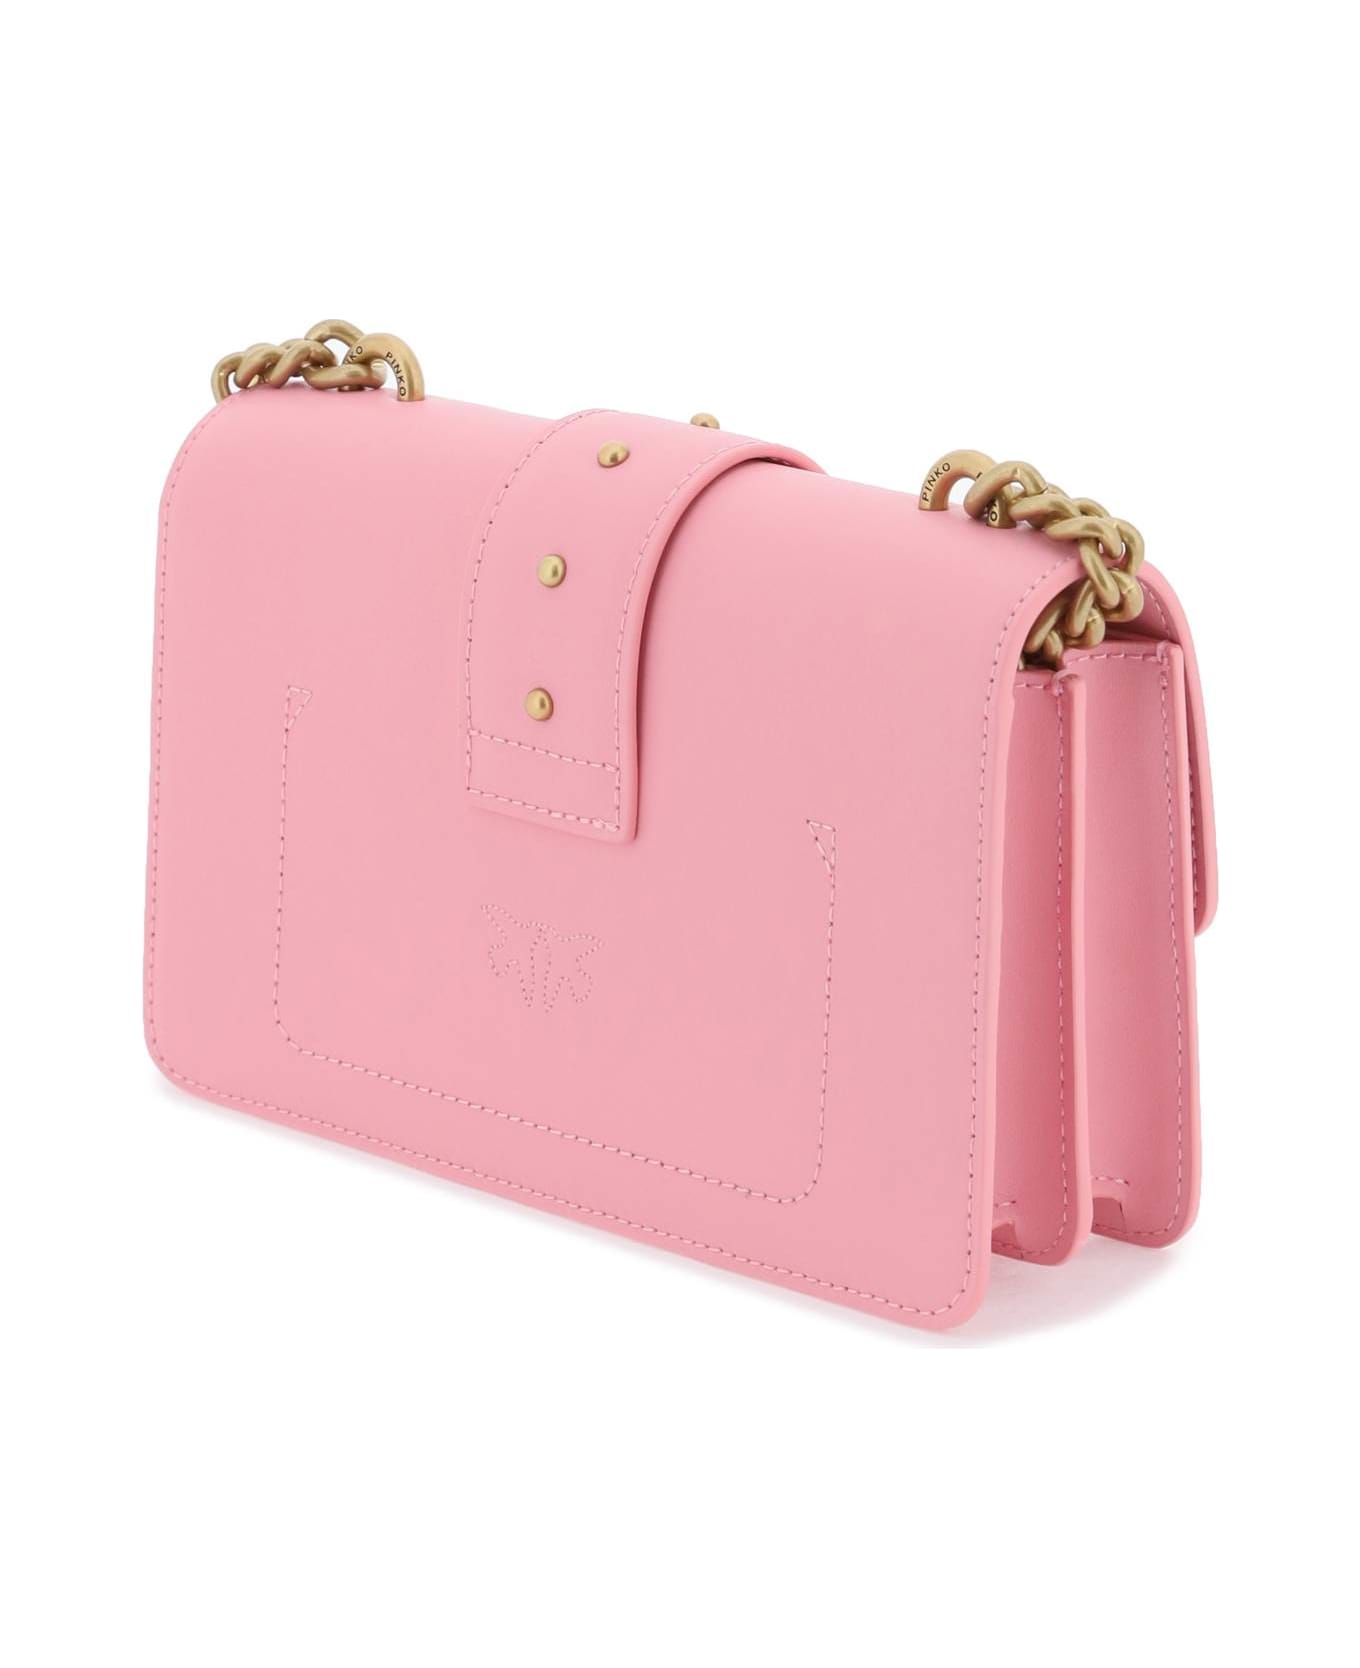 Pinko Mini Love Bag One Simply Shoulder Bag - ROSA MARINO ANTIQUE GOLD (Pink)